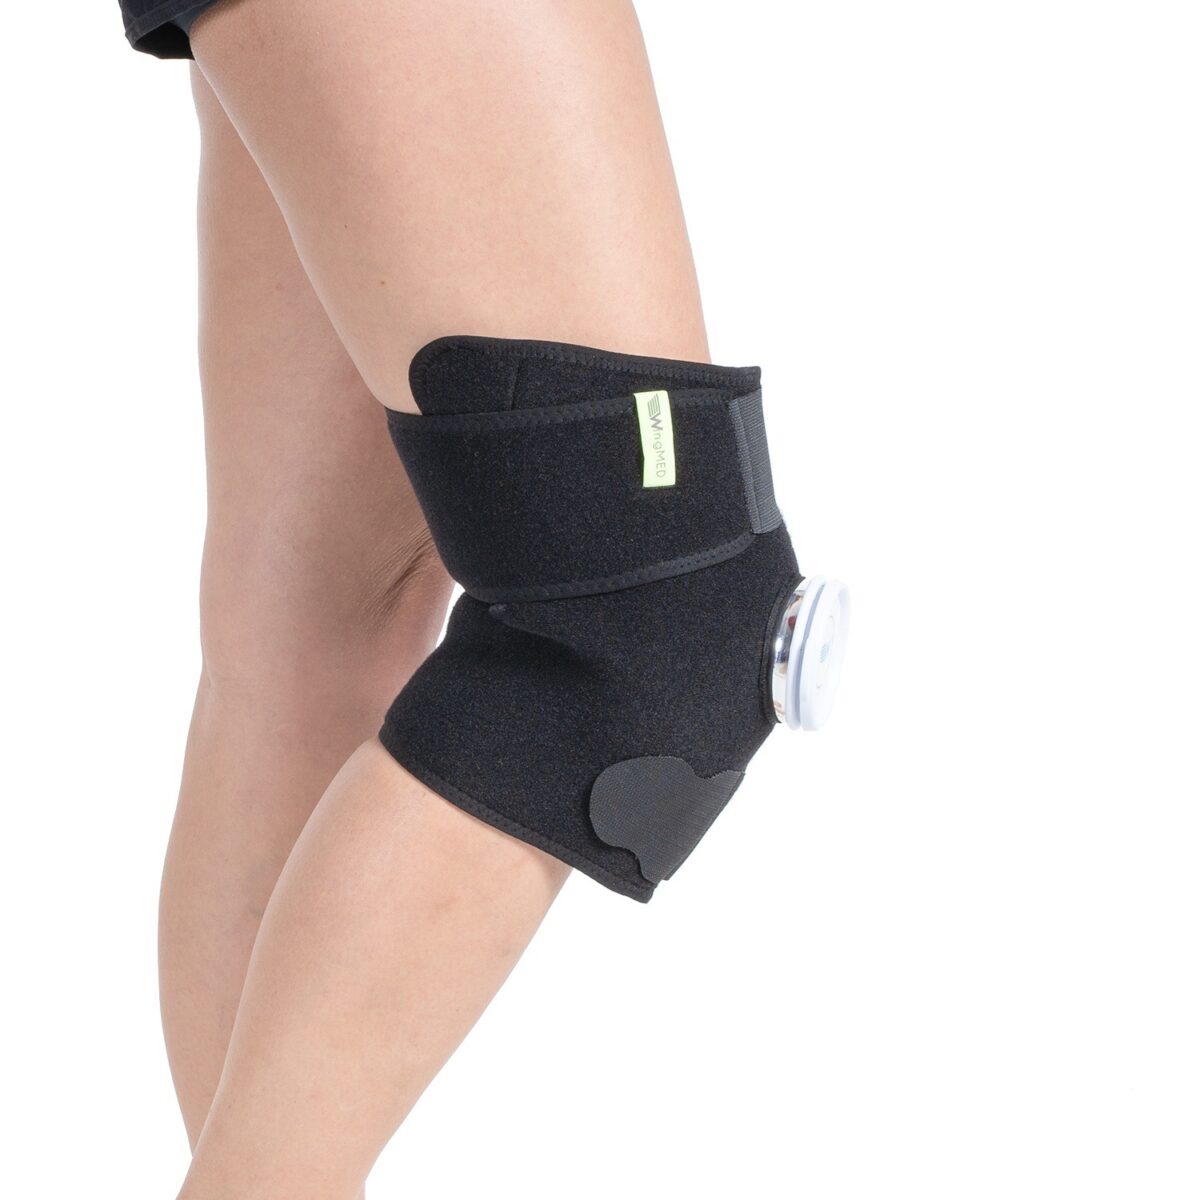 wingmed orthopedic equipments W538 ice bag knee support 49 2